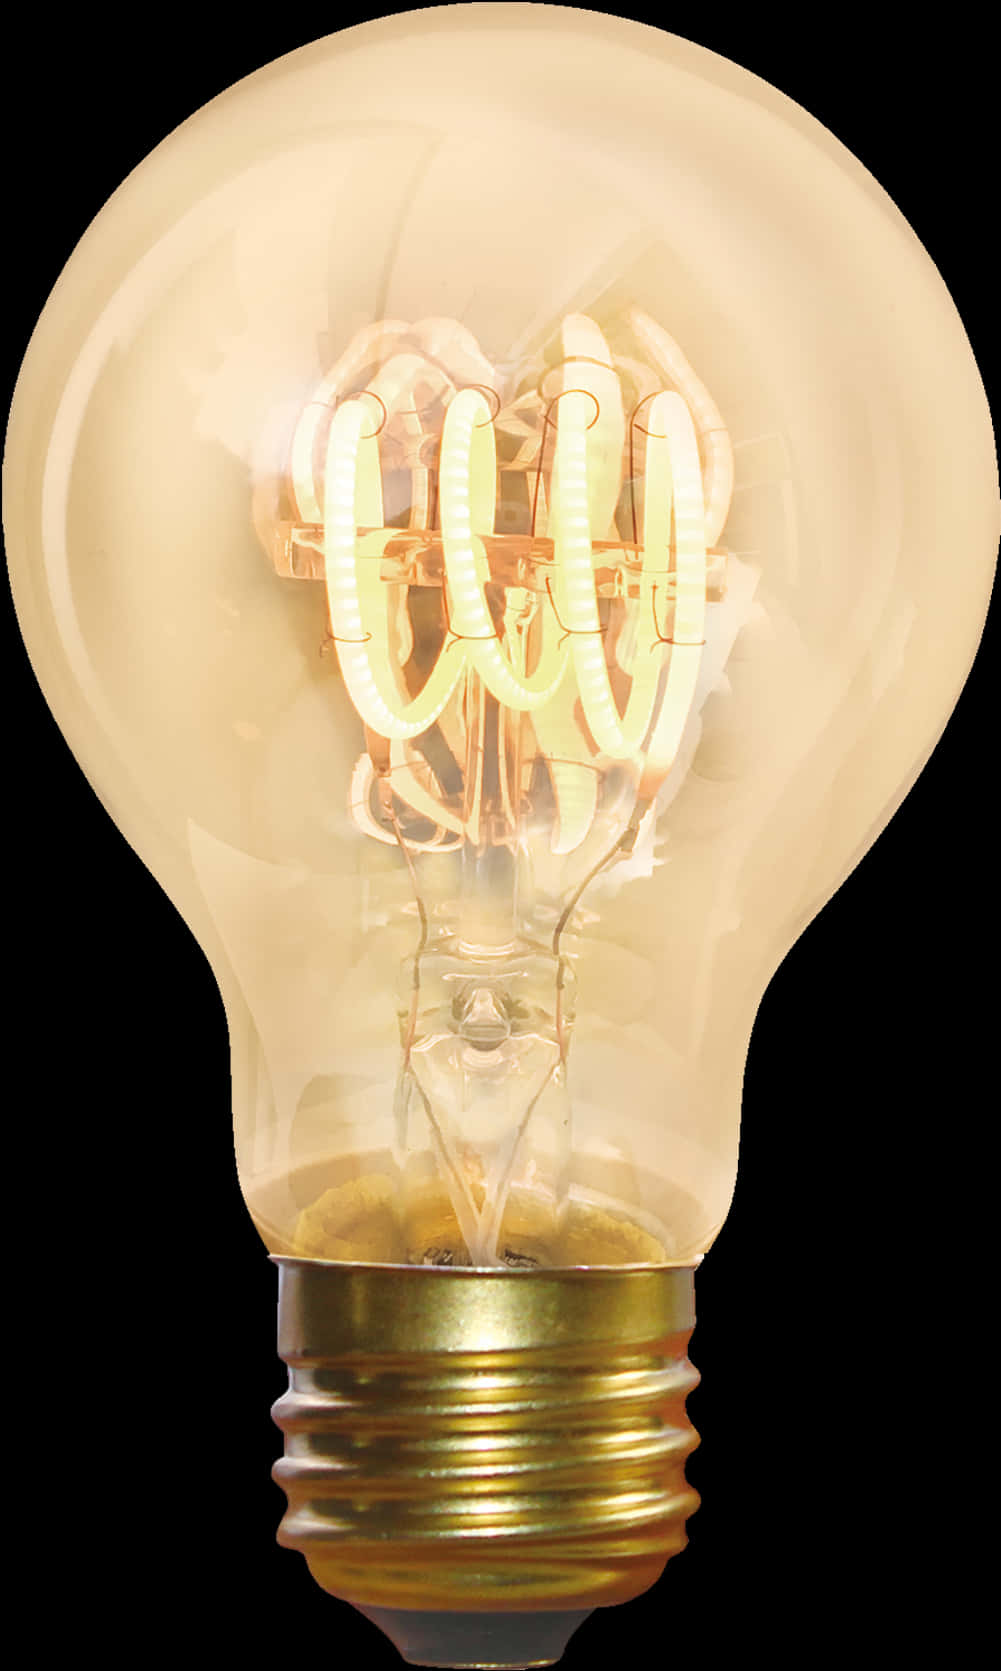 A Light Bulb With A Filament